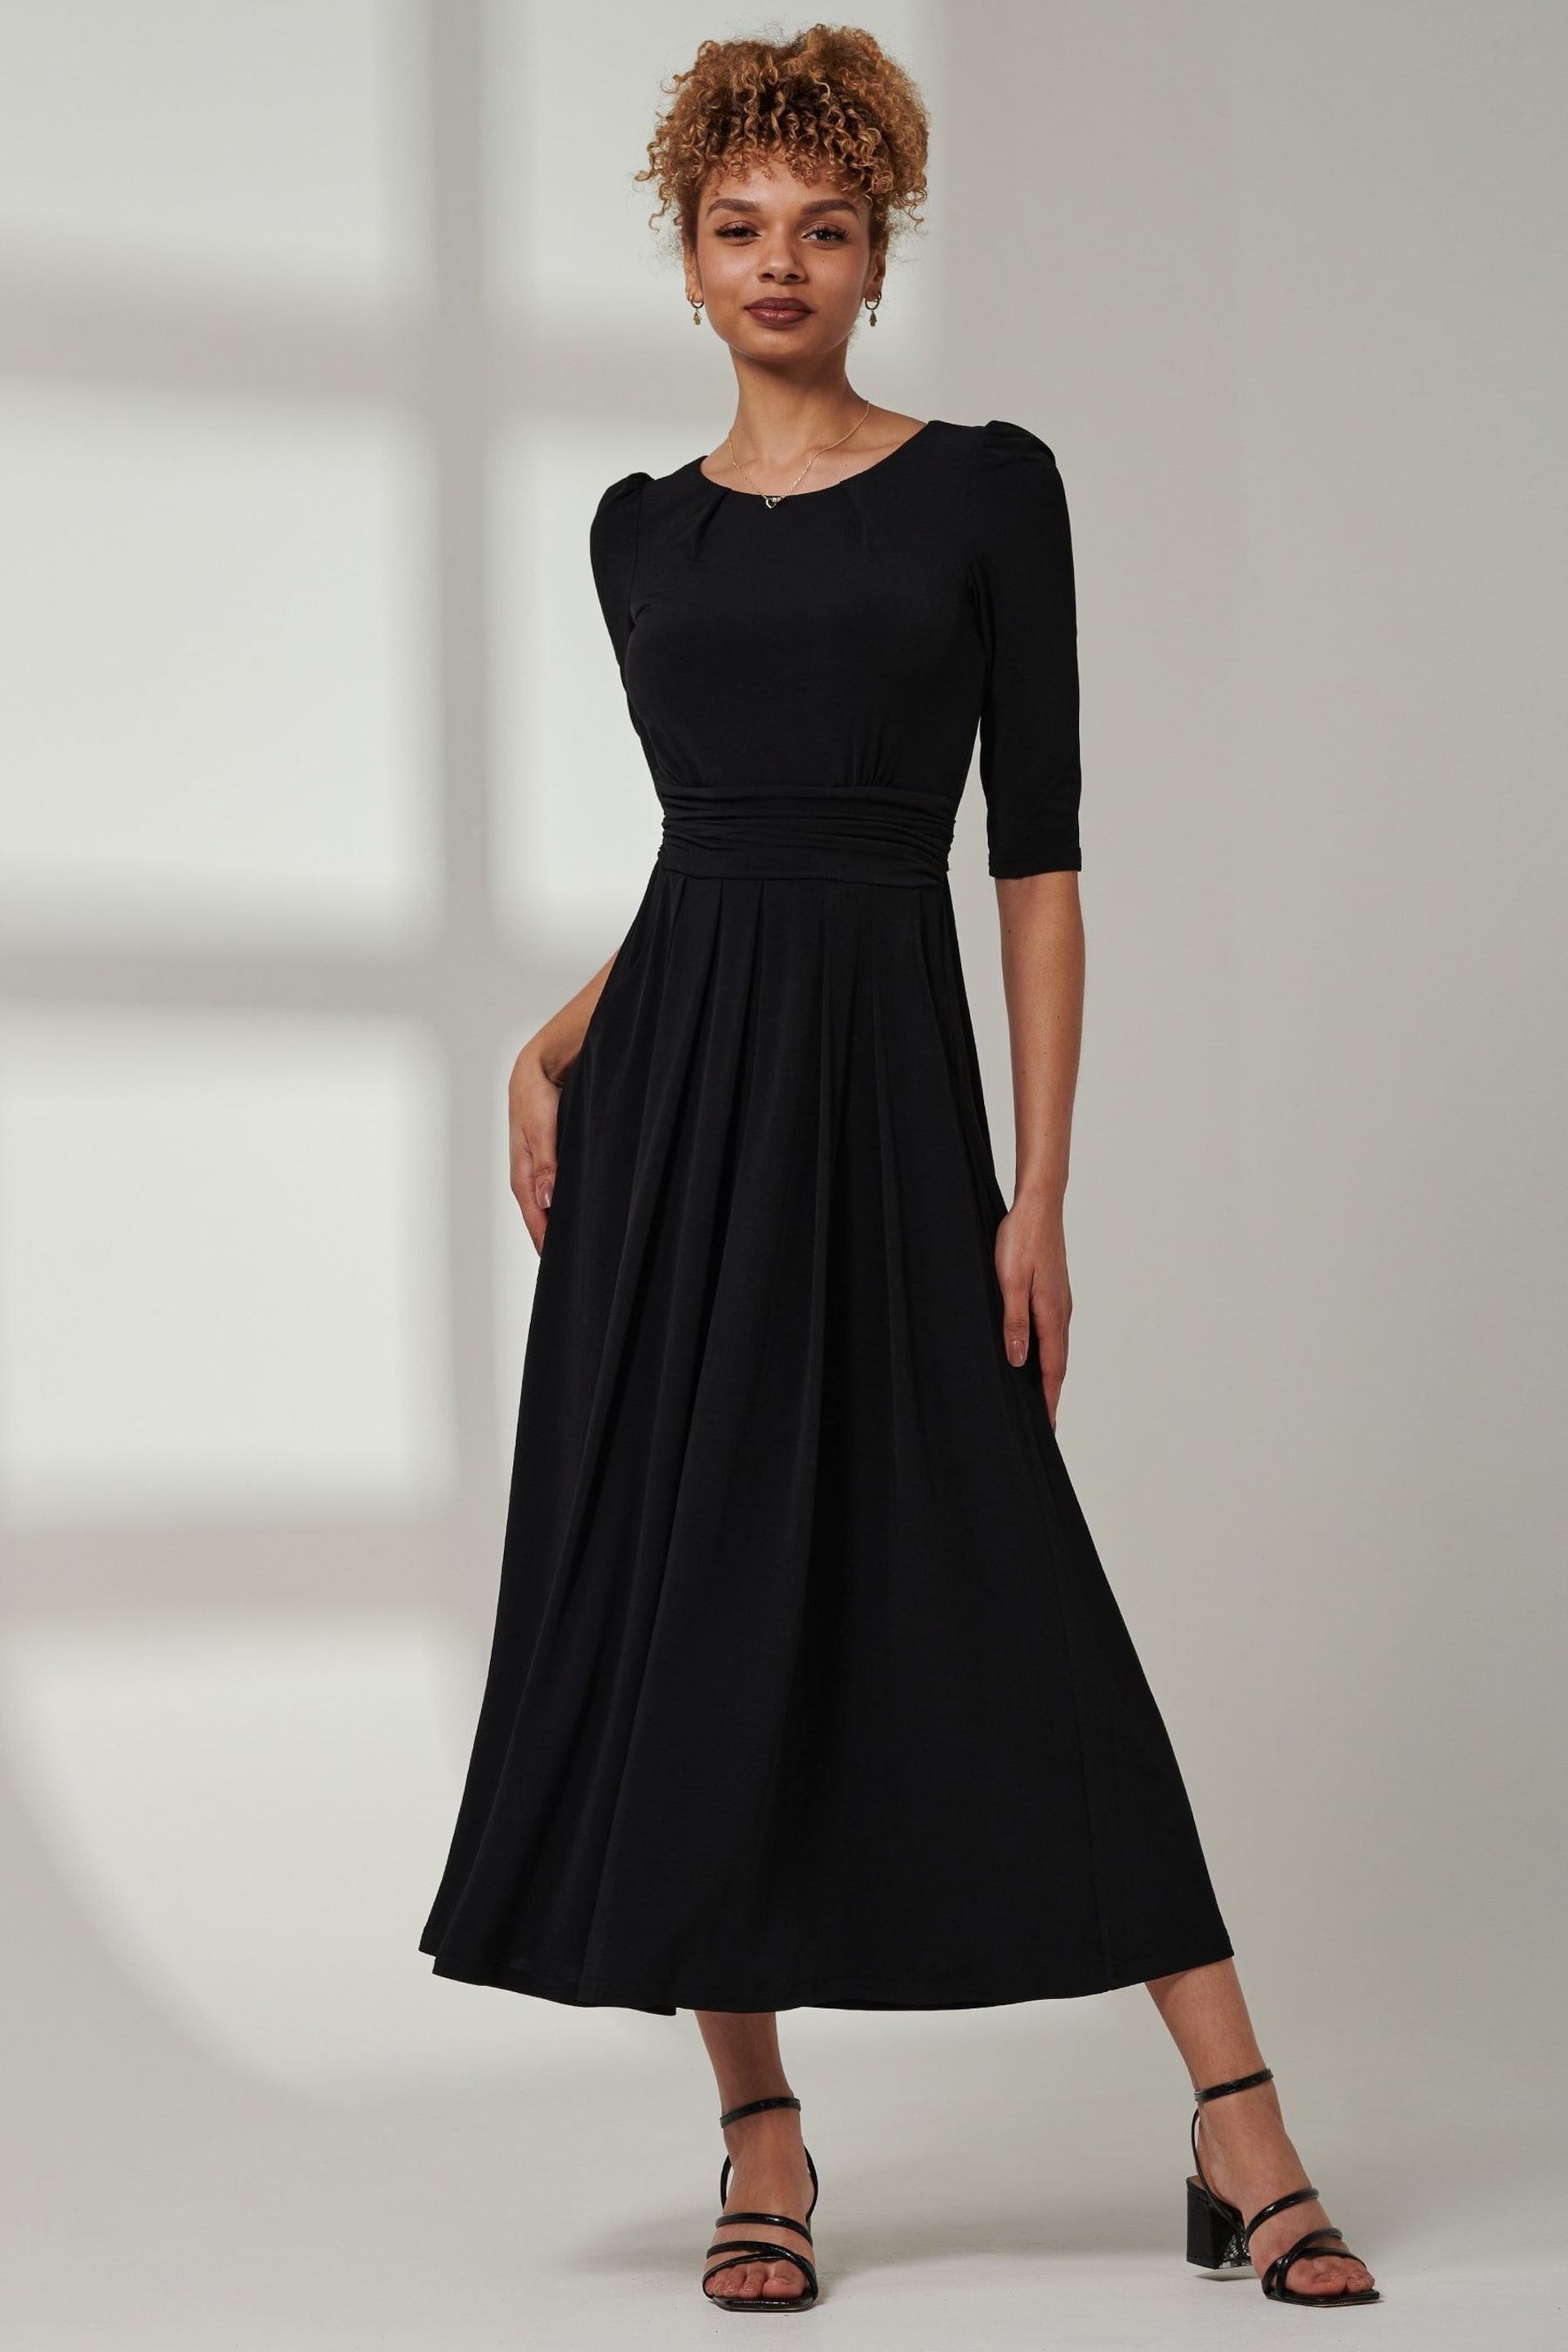 Jolie Moi Black Parker 3/4 Sleeve Maxi Dress - Image 4 of 6